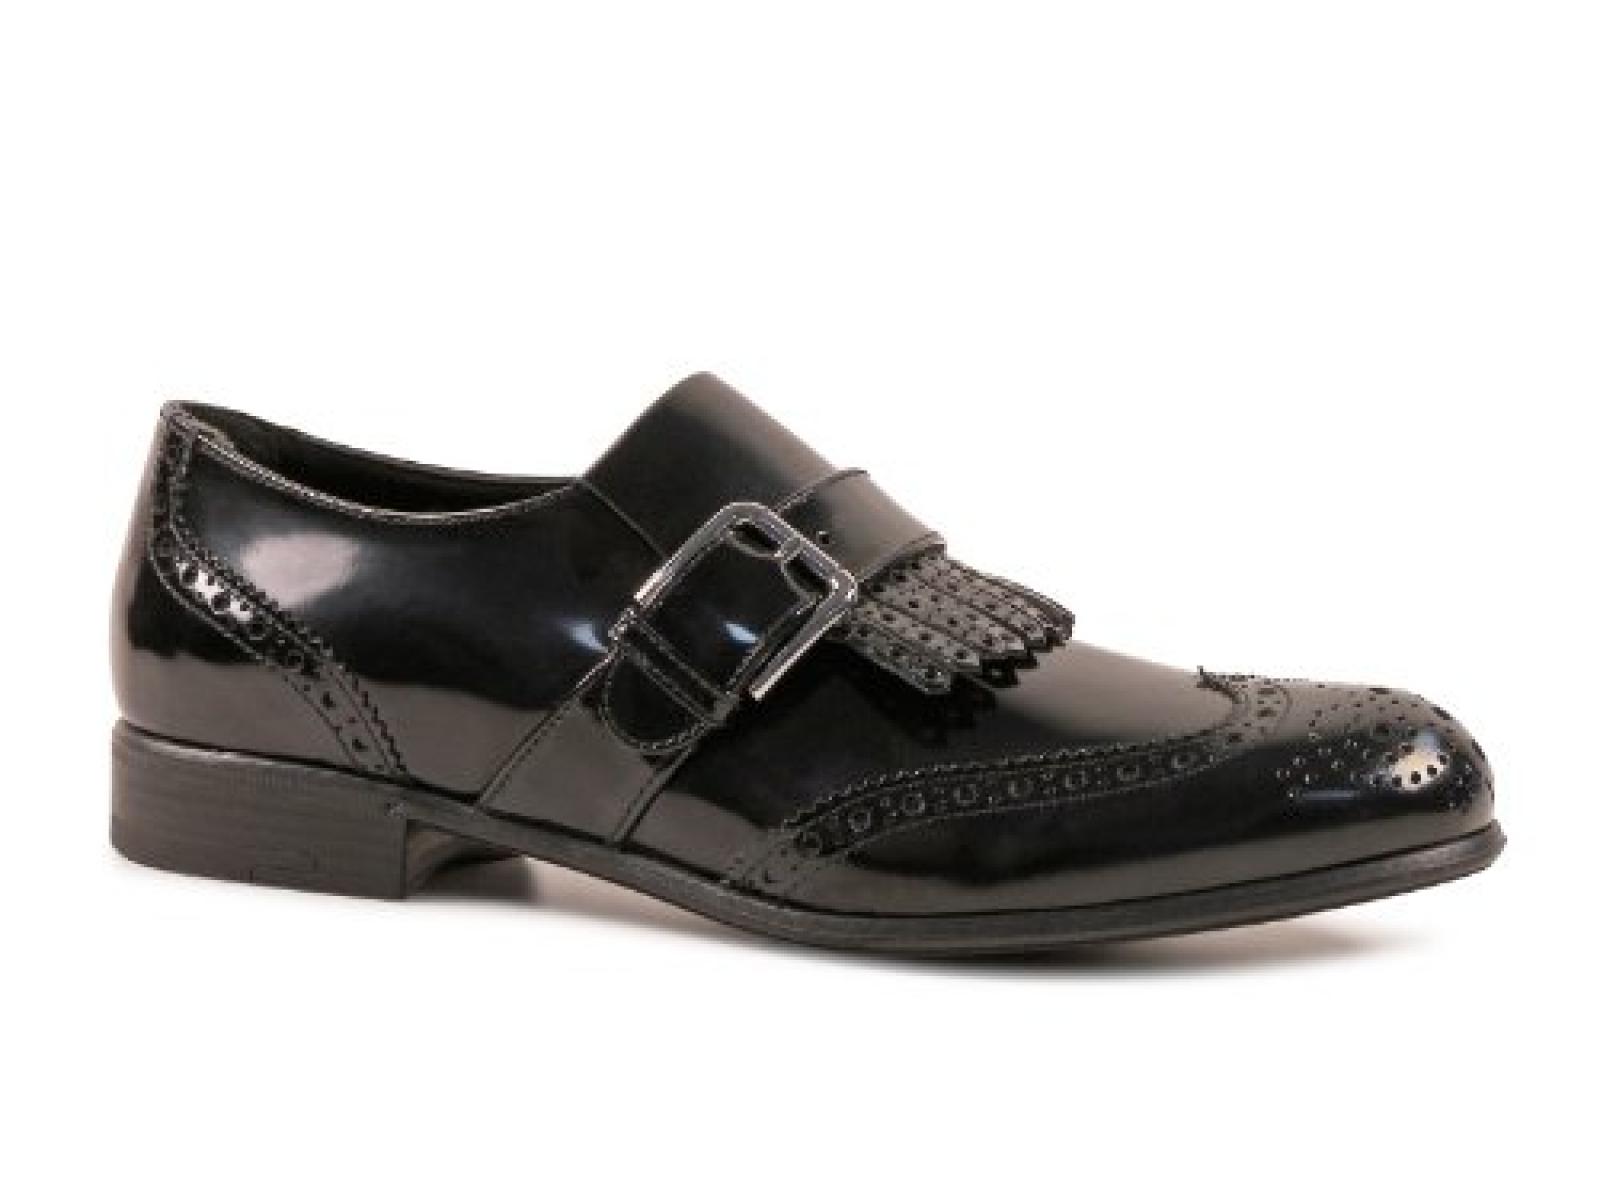 Dolce & Gabbana Frauen schwarz Luxus-Leder-Mokassins-Schuhe - Modellnummer: C16418 A1037 80999 